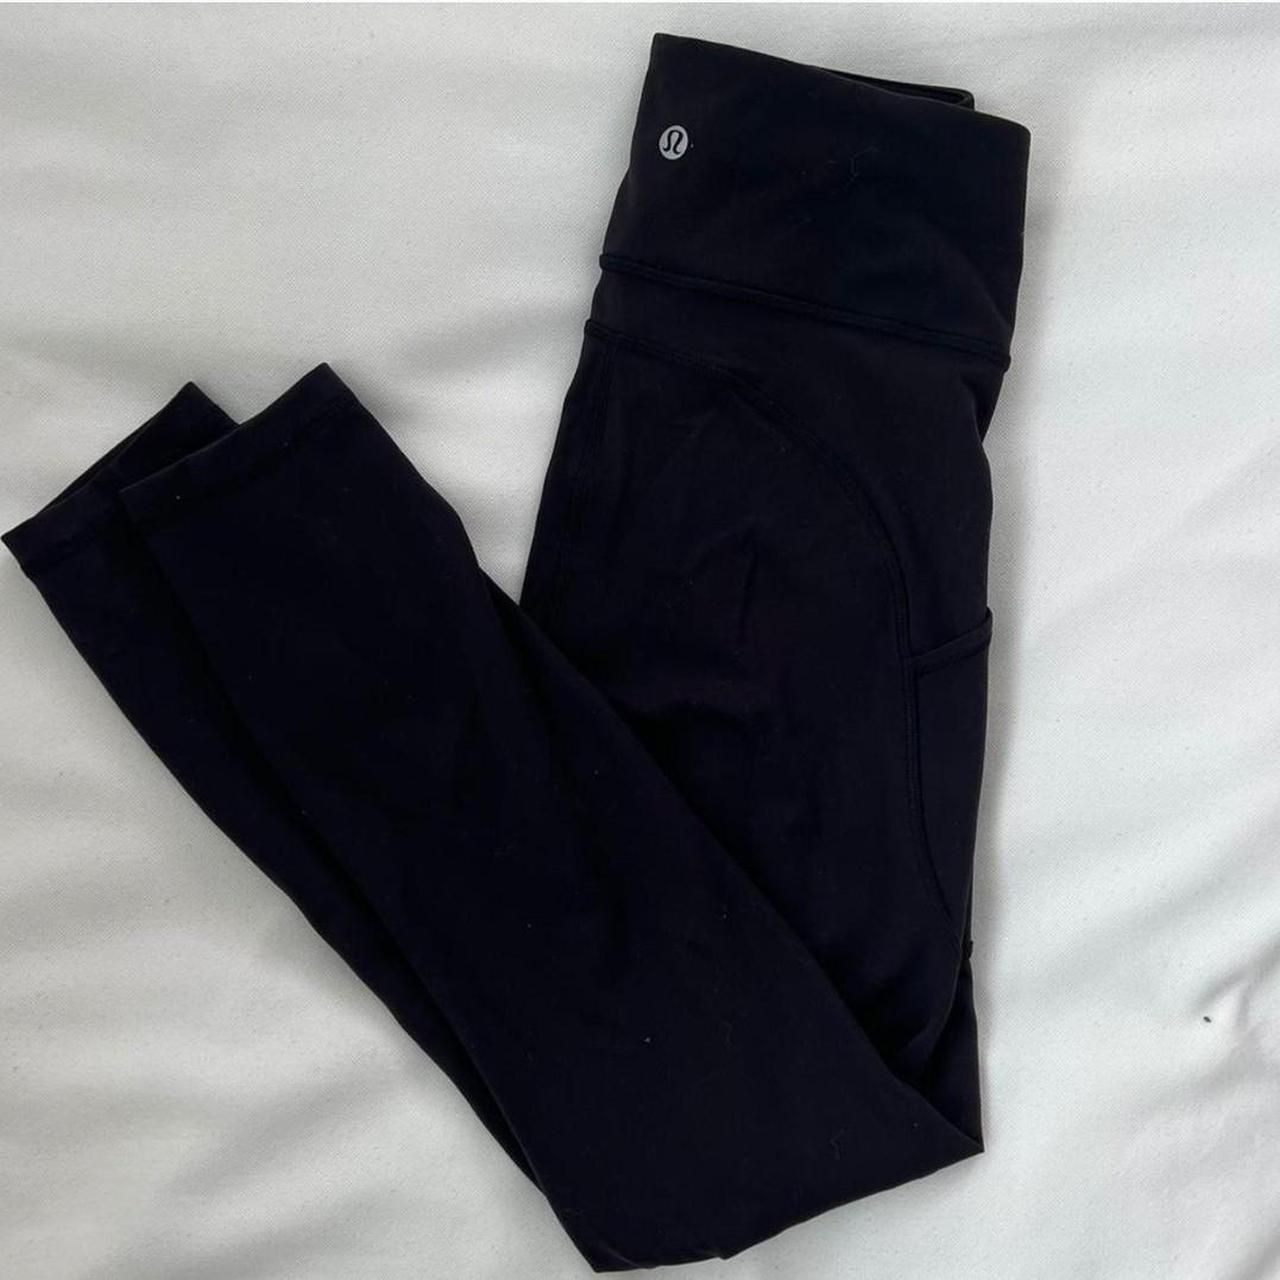 Black Lululemon invigorate leggings with pockets - Depop